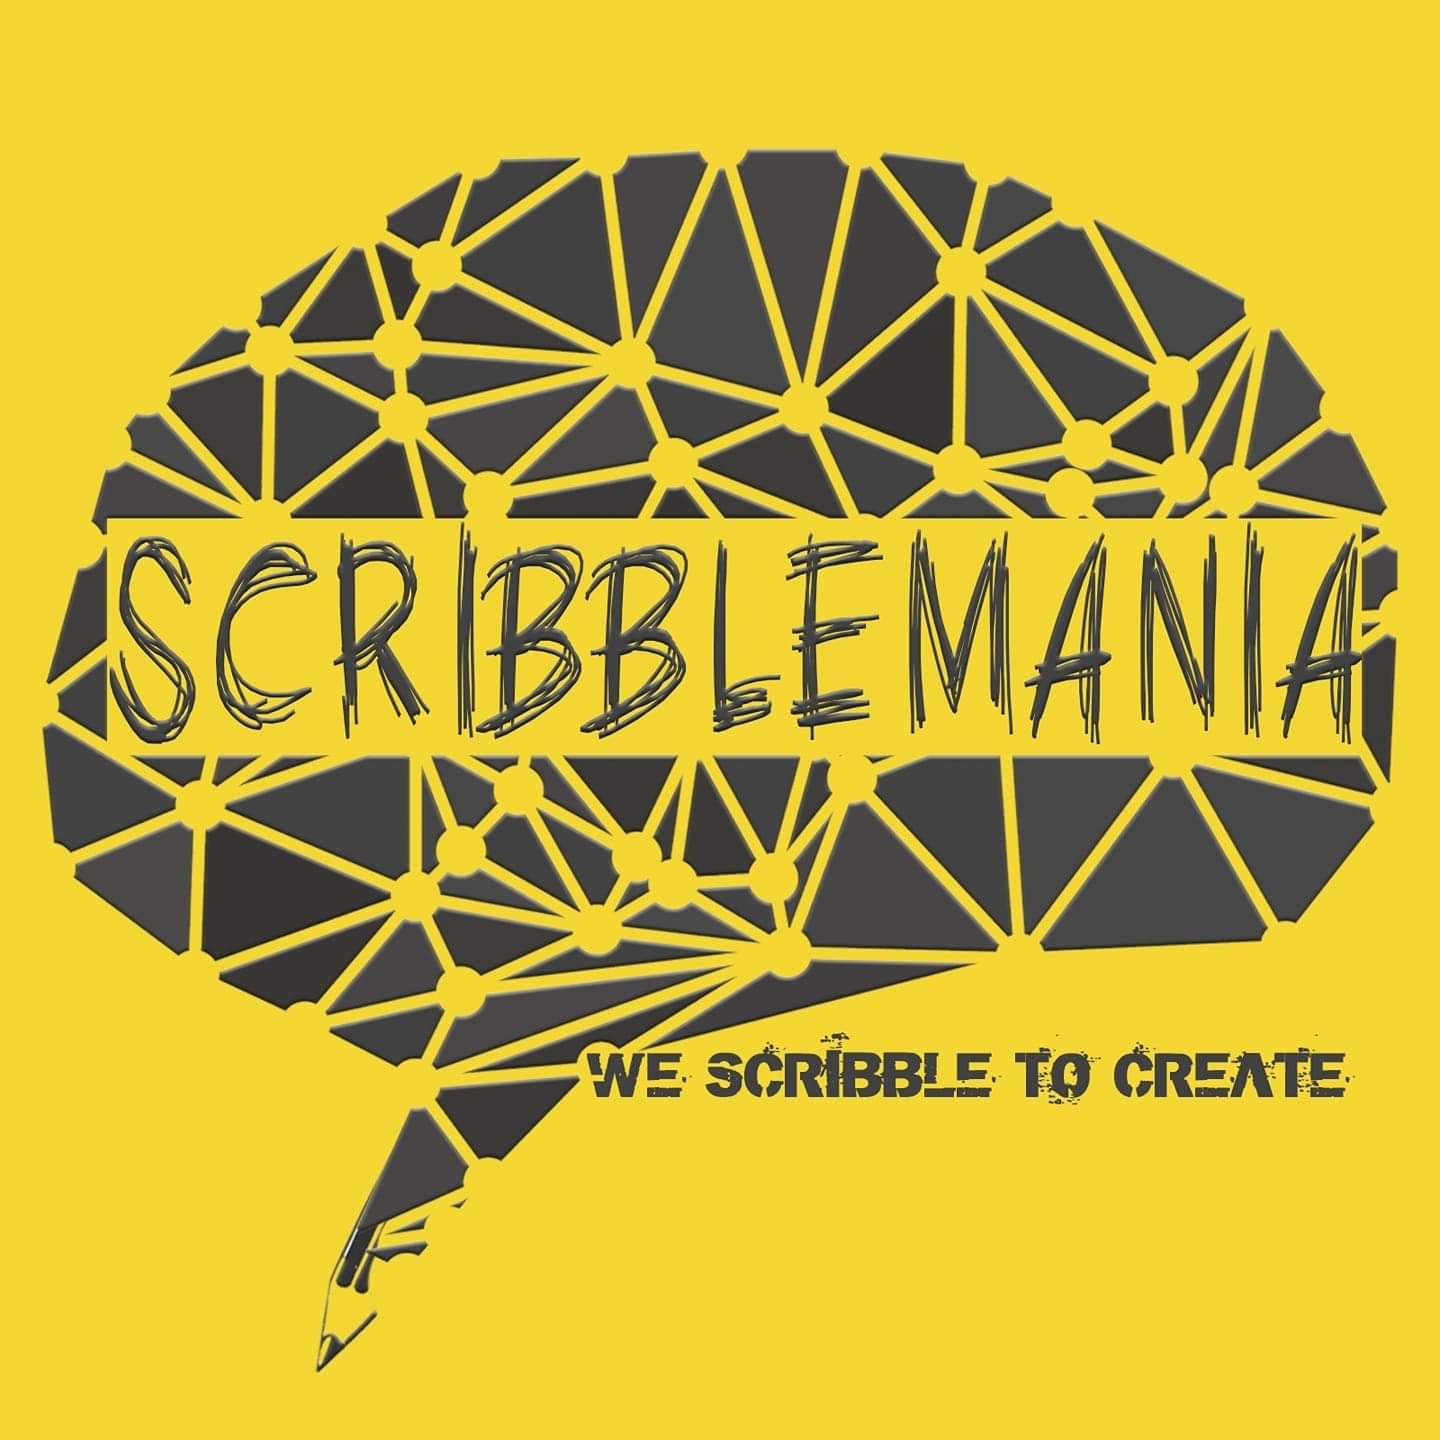 Scribble Mania